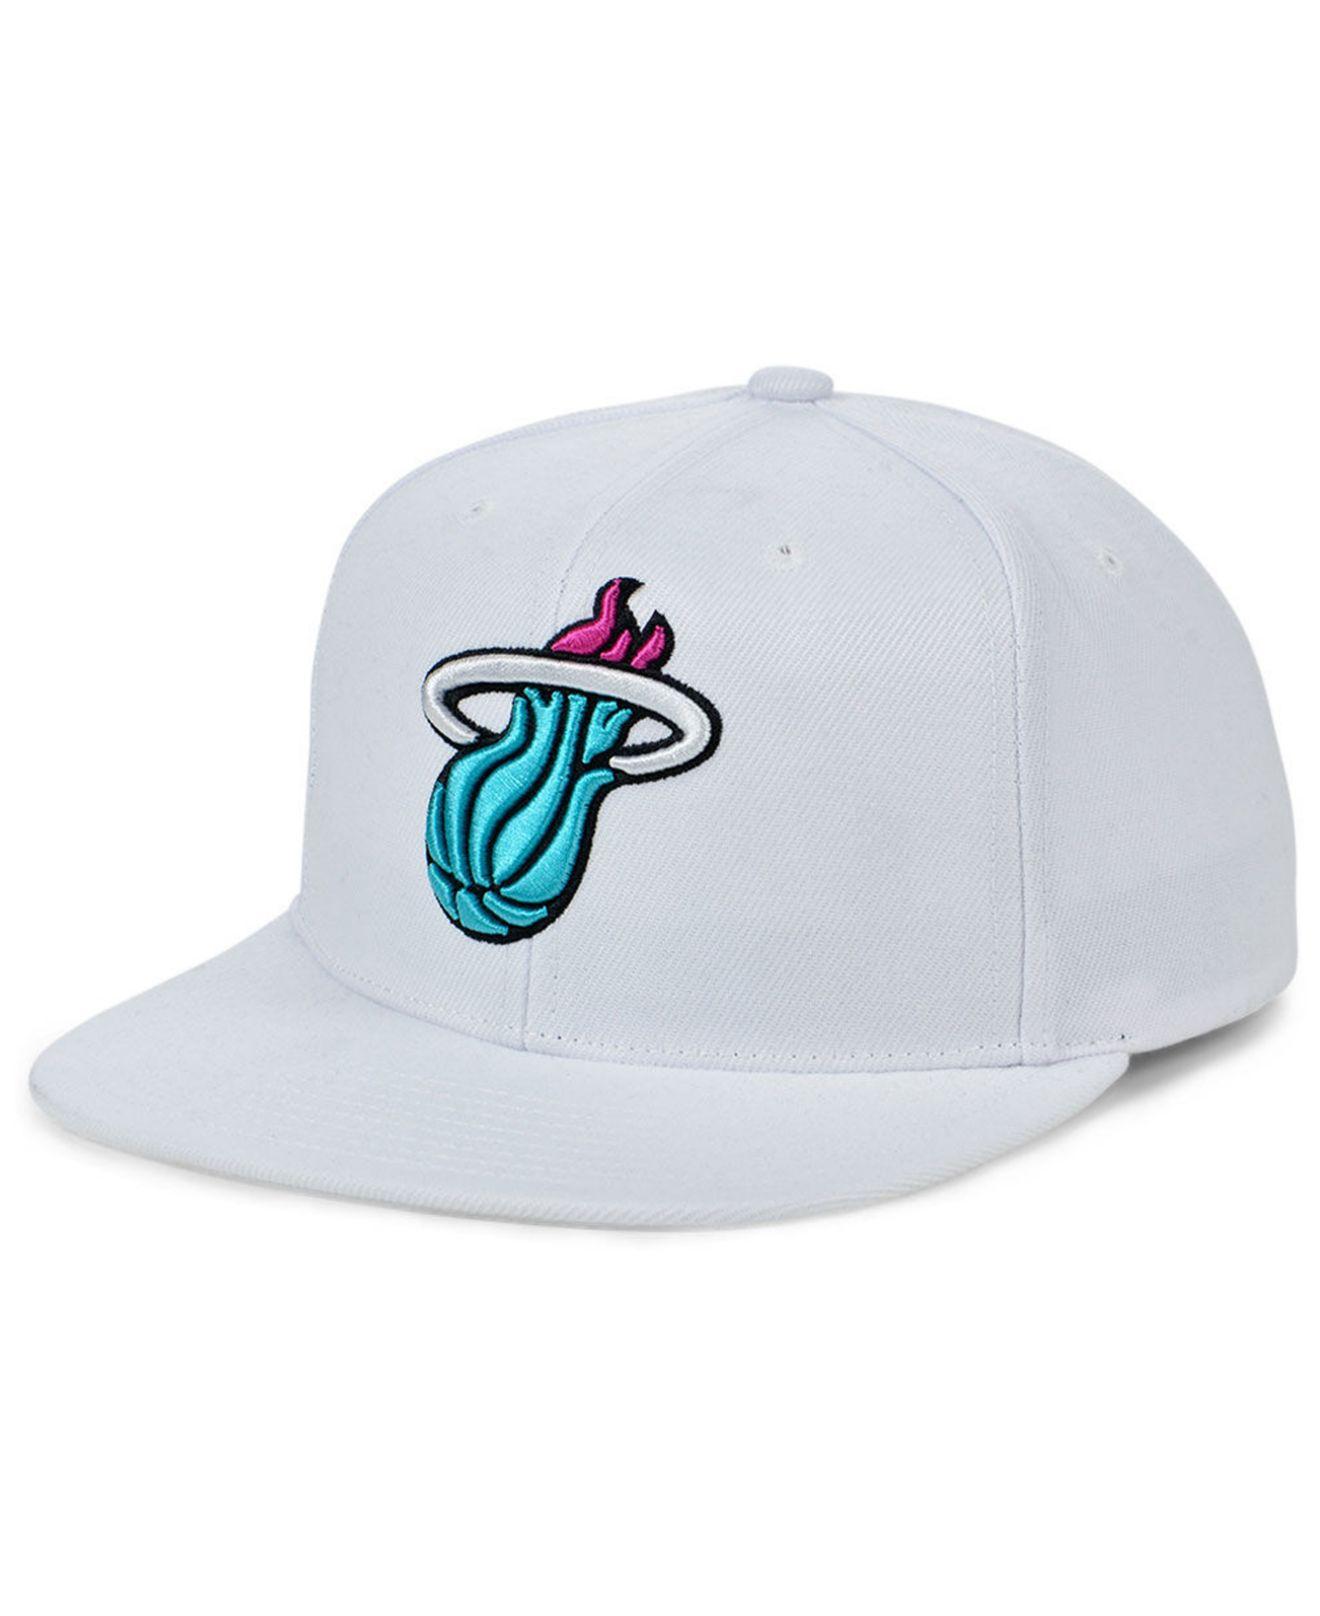 Men's Miami Heat Mitchell & Ness White Core Side Snapback Hat